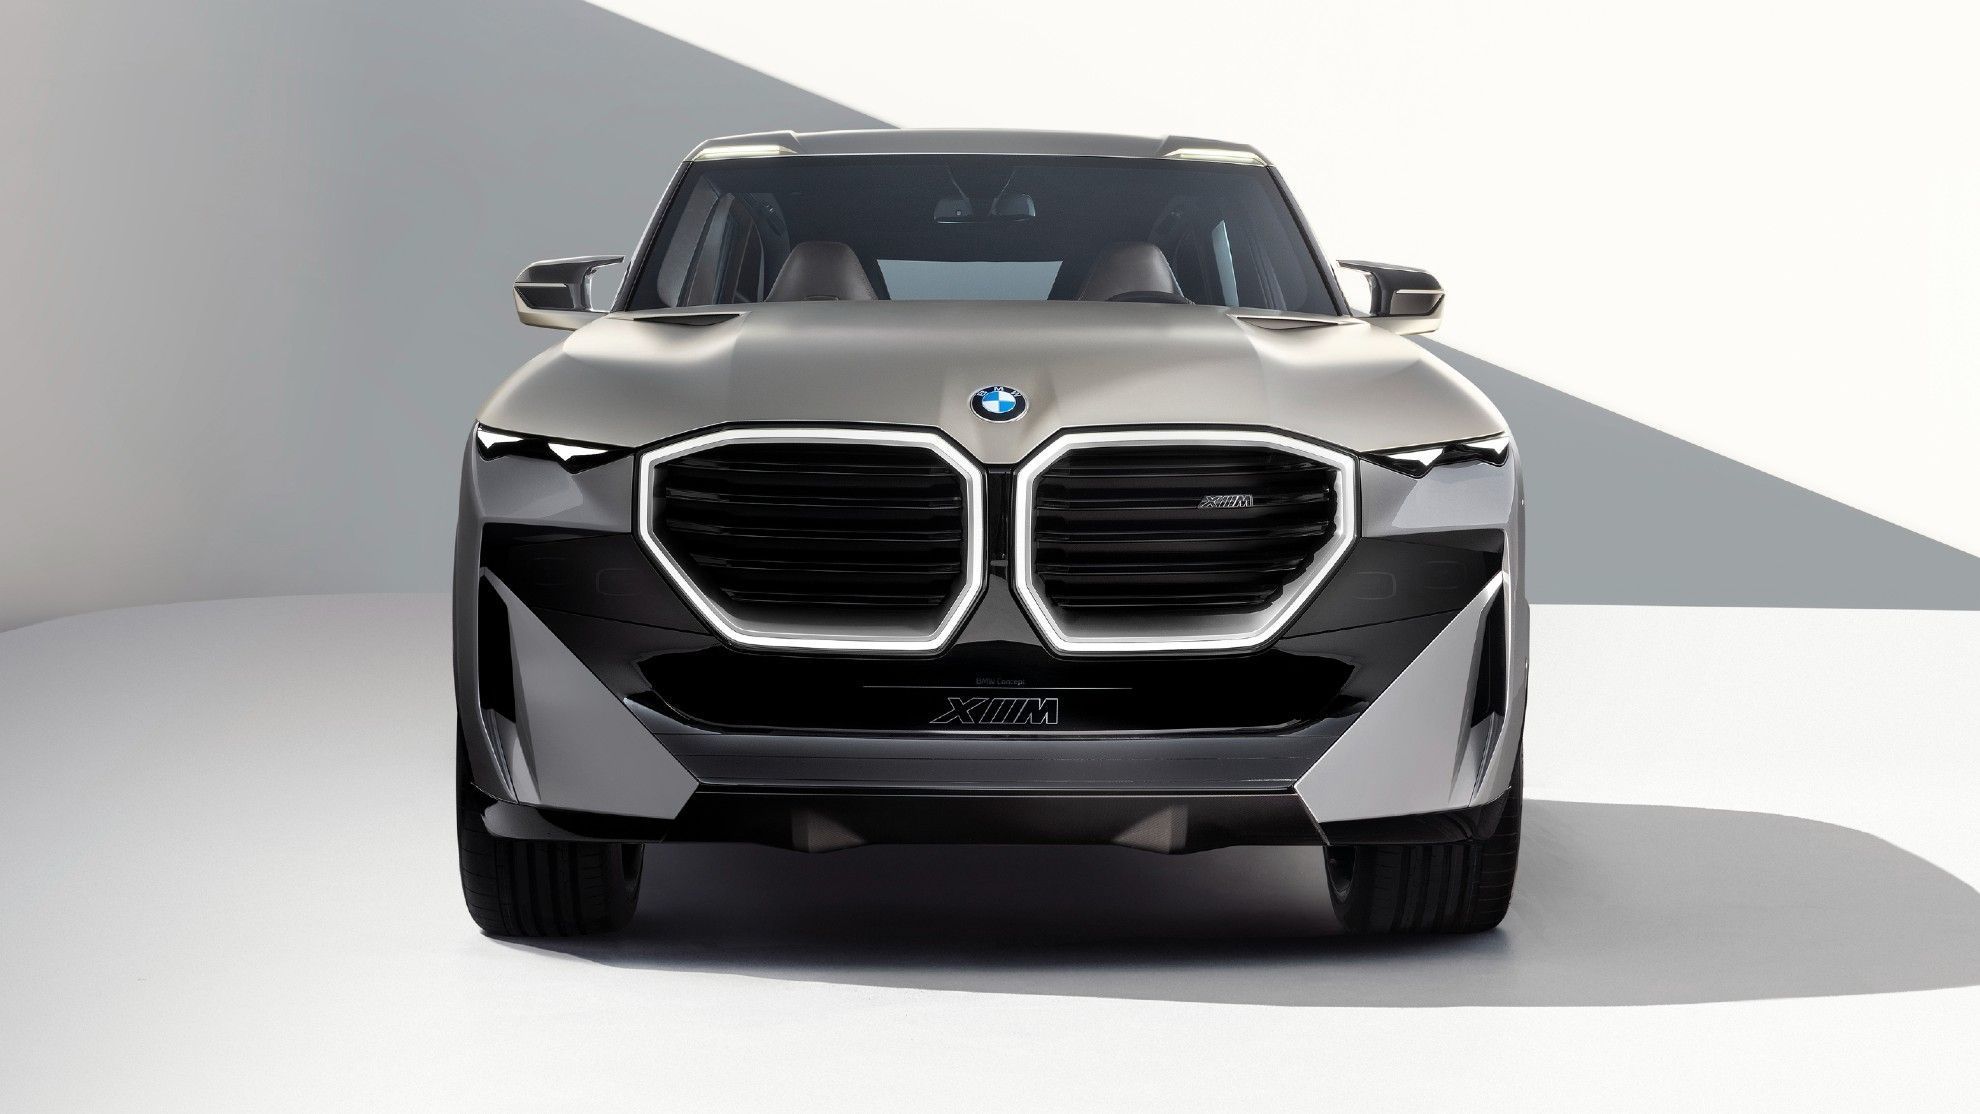 El XM Concept, la futura bestia híbrida de BMW, en imágenes